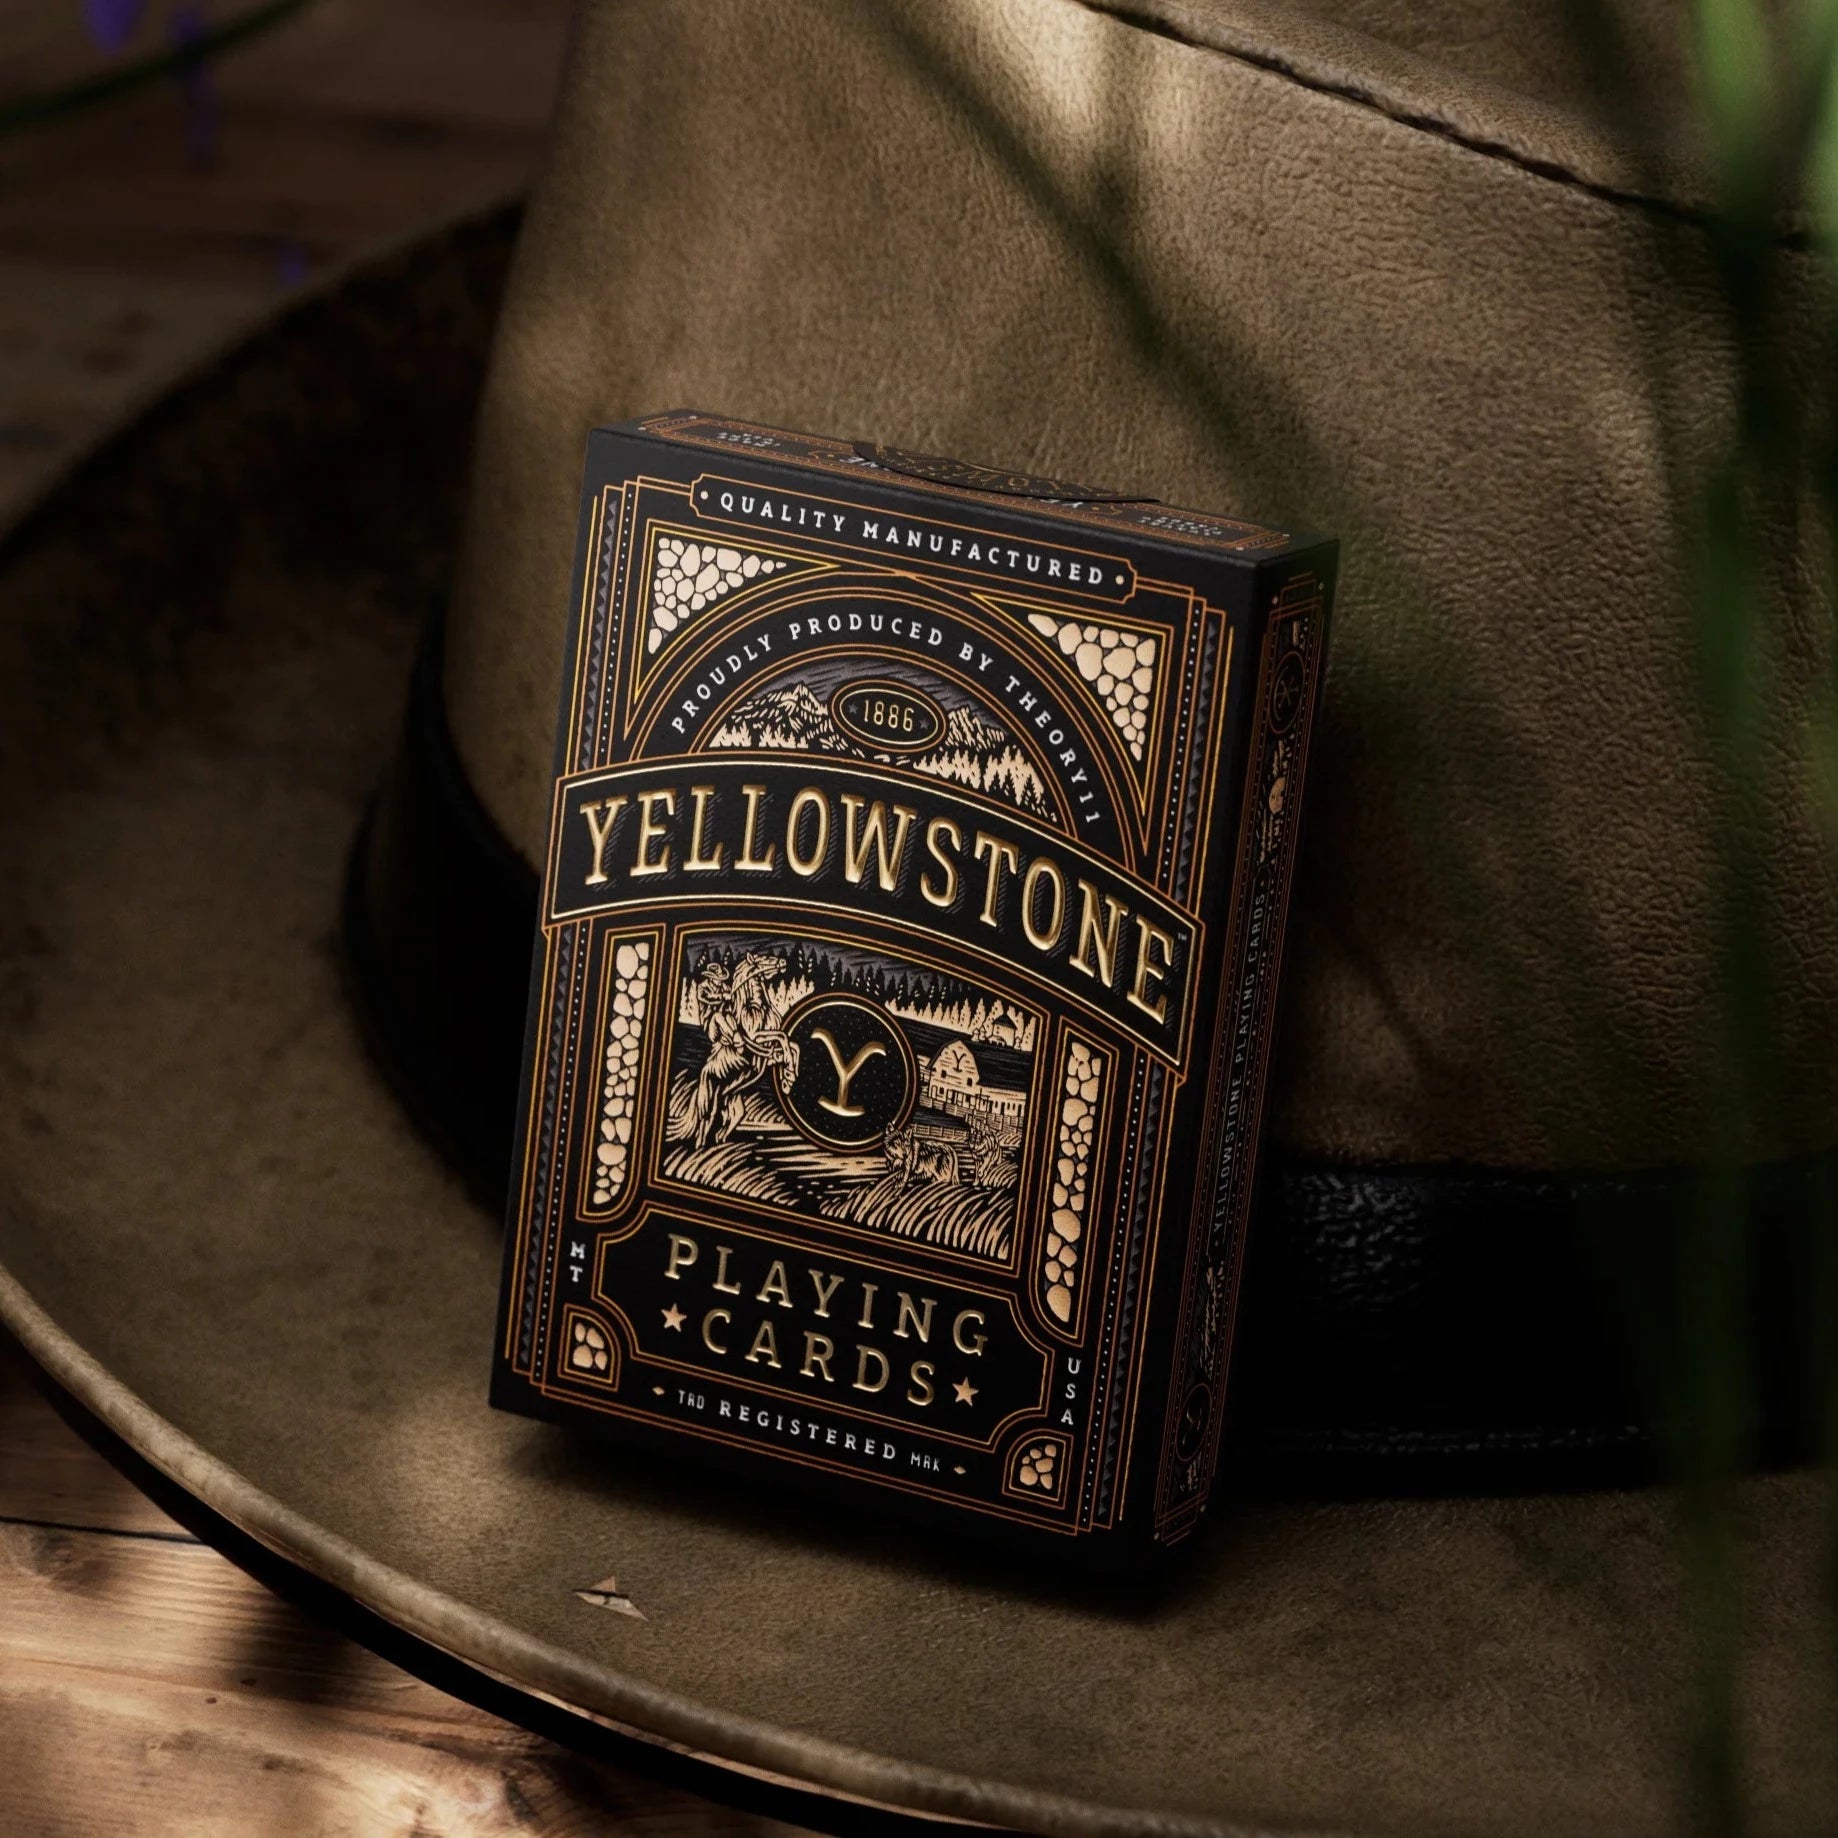 Theory 11 - Yellowstone Playing Cards